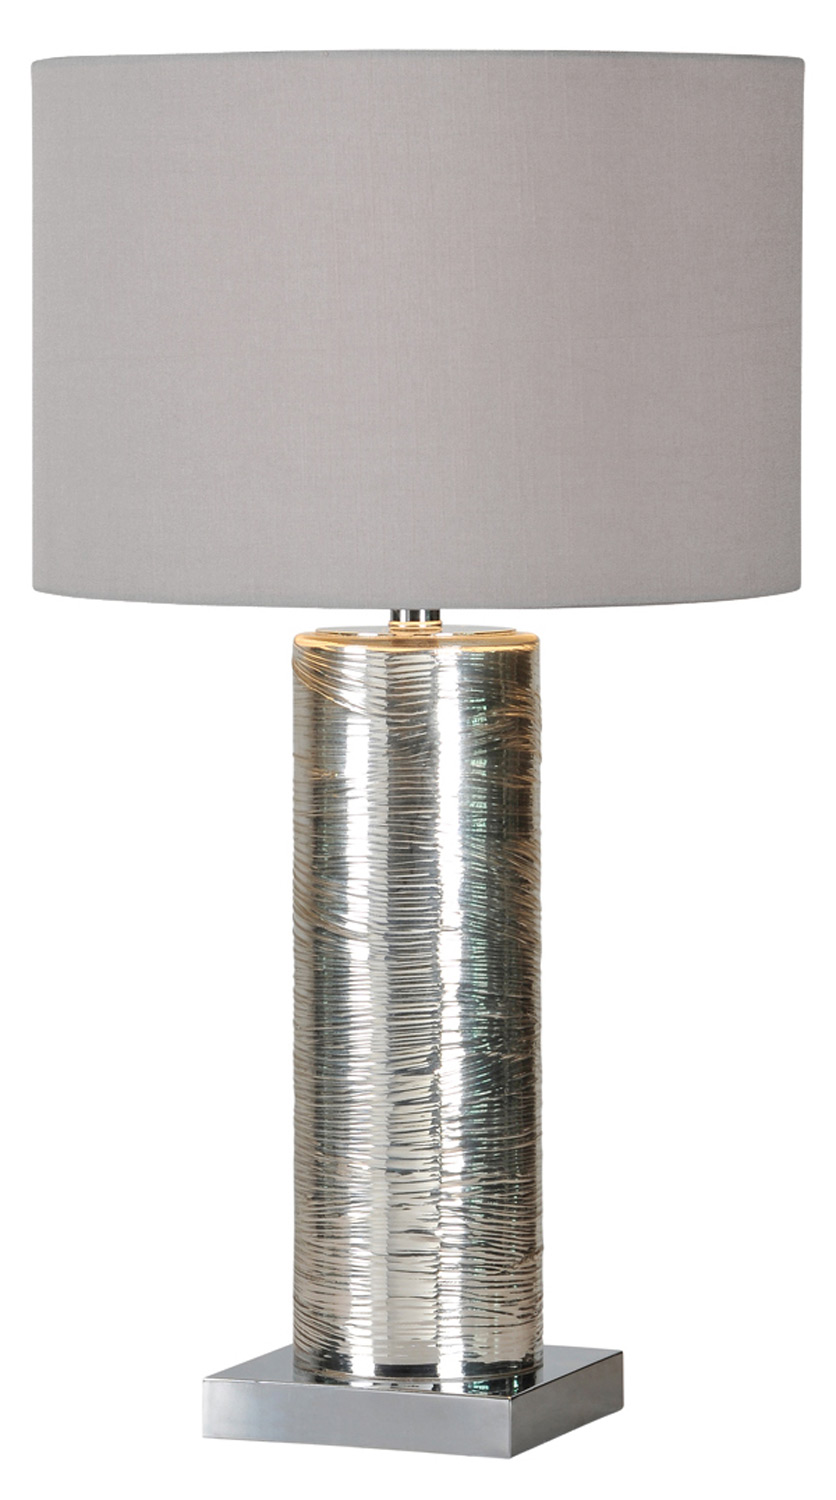 Ren-Wil LPT265 Table Lamp